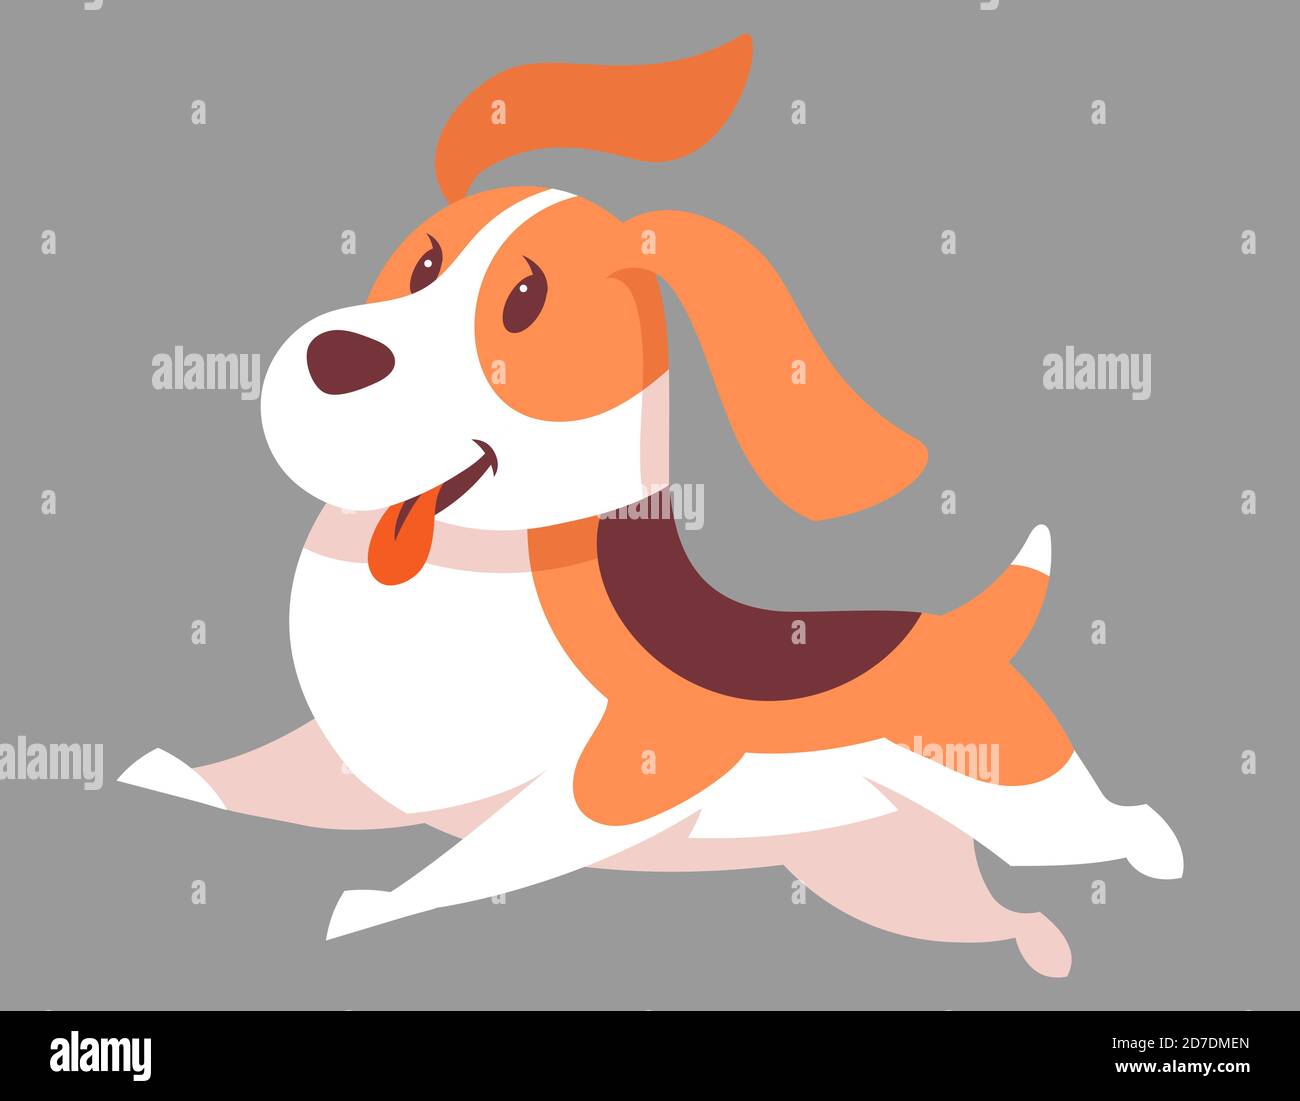 Running Beagle dog. Cute pet in cartoon style. Stock Vector